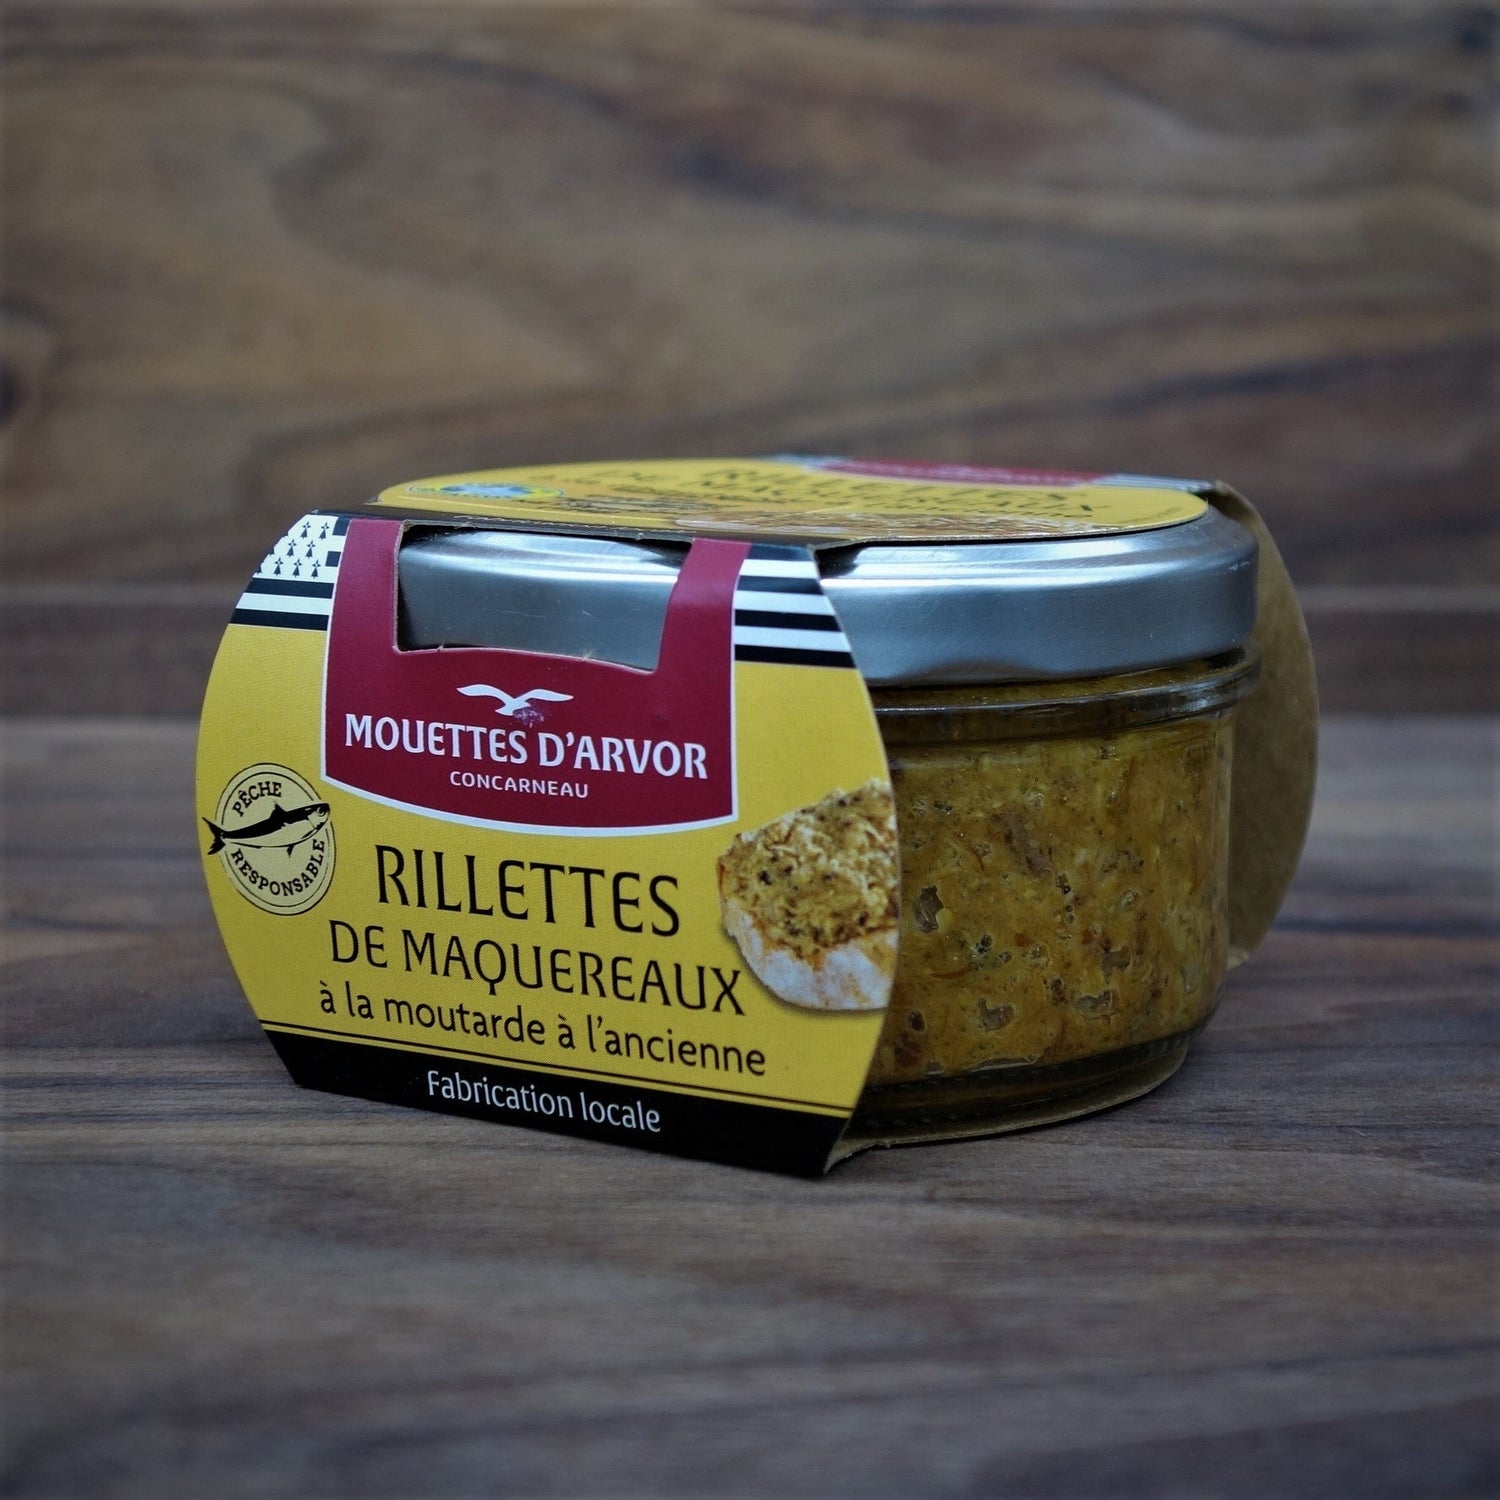 Les Mouette d'Arvor Rillettes of Mackeral W/ Mustard - Mongers' Provisions